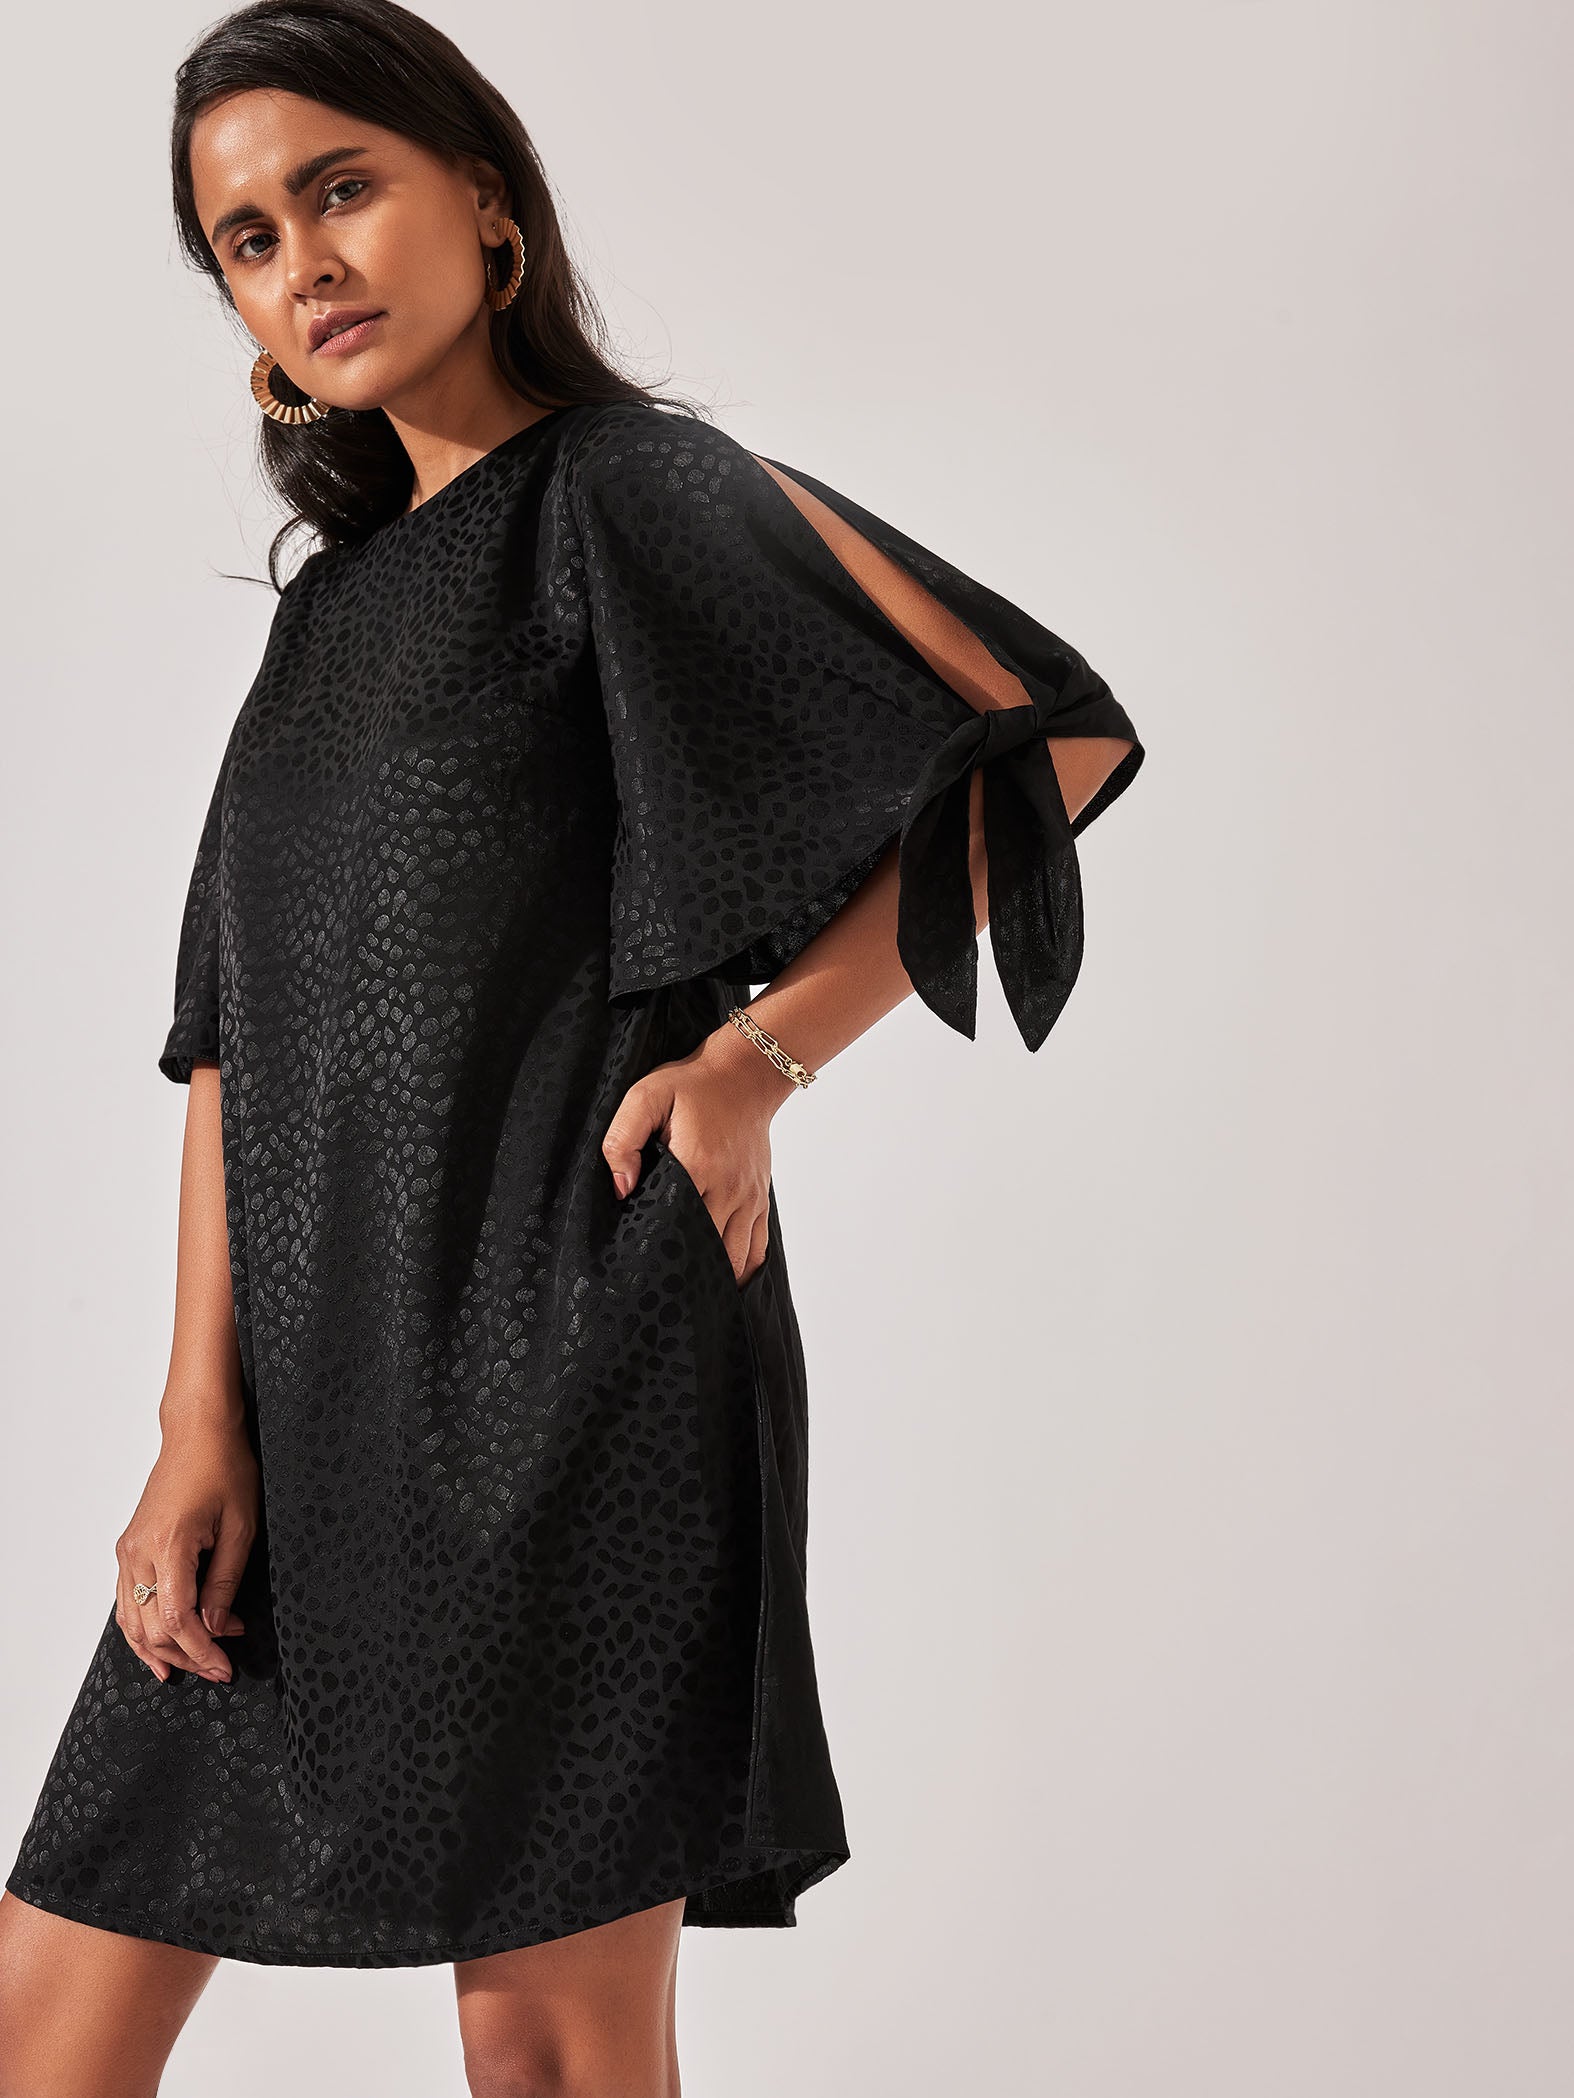 Black Satin Textured Dress